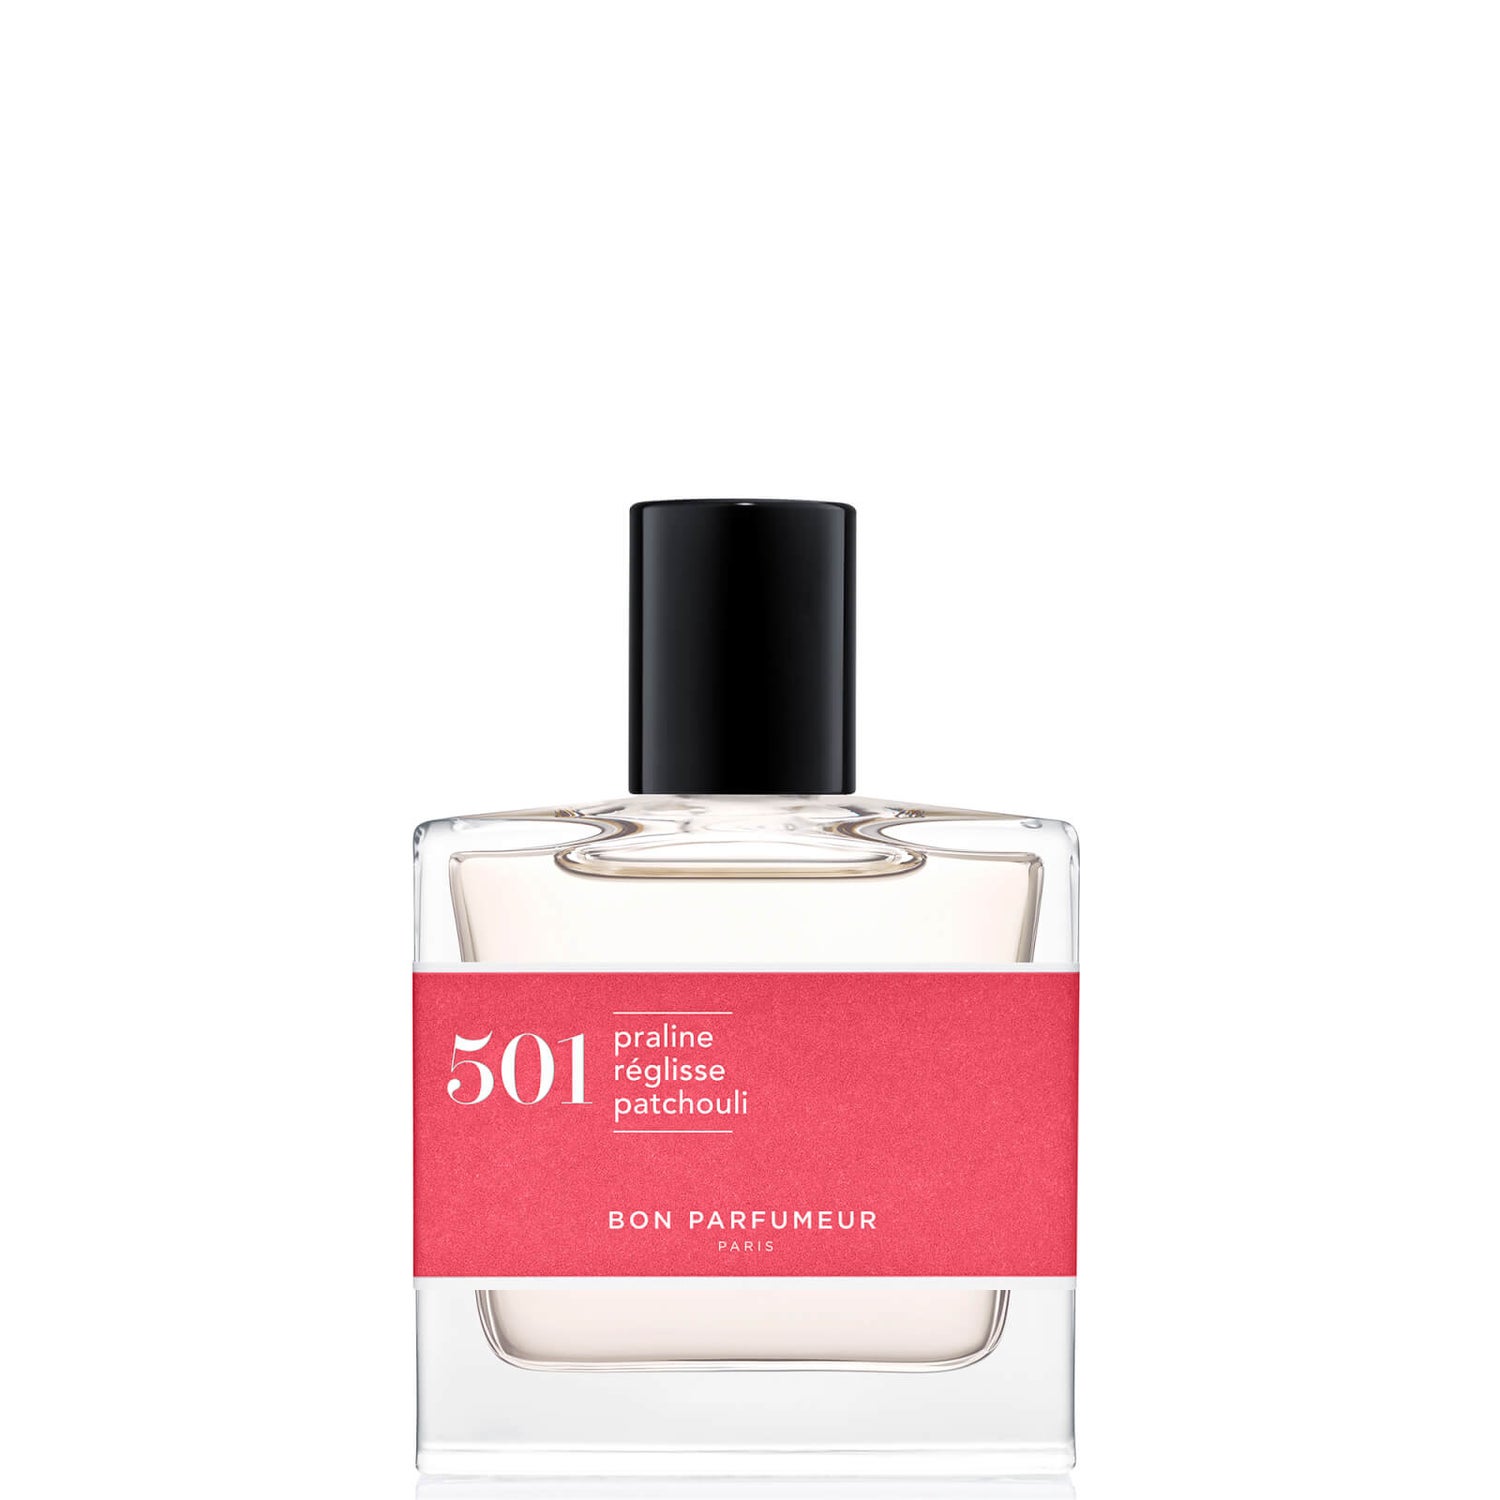 Bon Parfumeur 501 Praline Licorice Patchouli Apă de parfum - 30ml